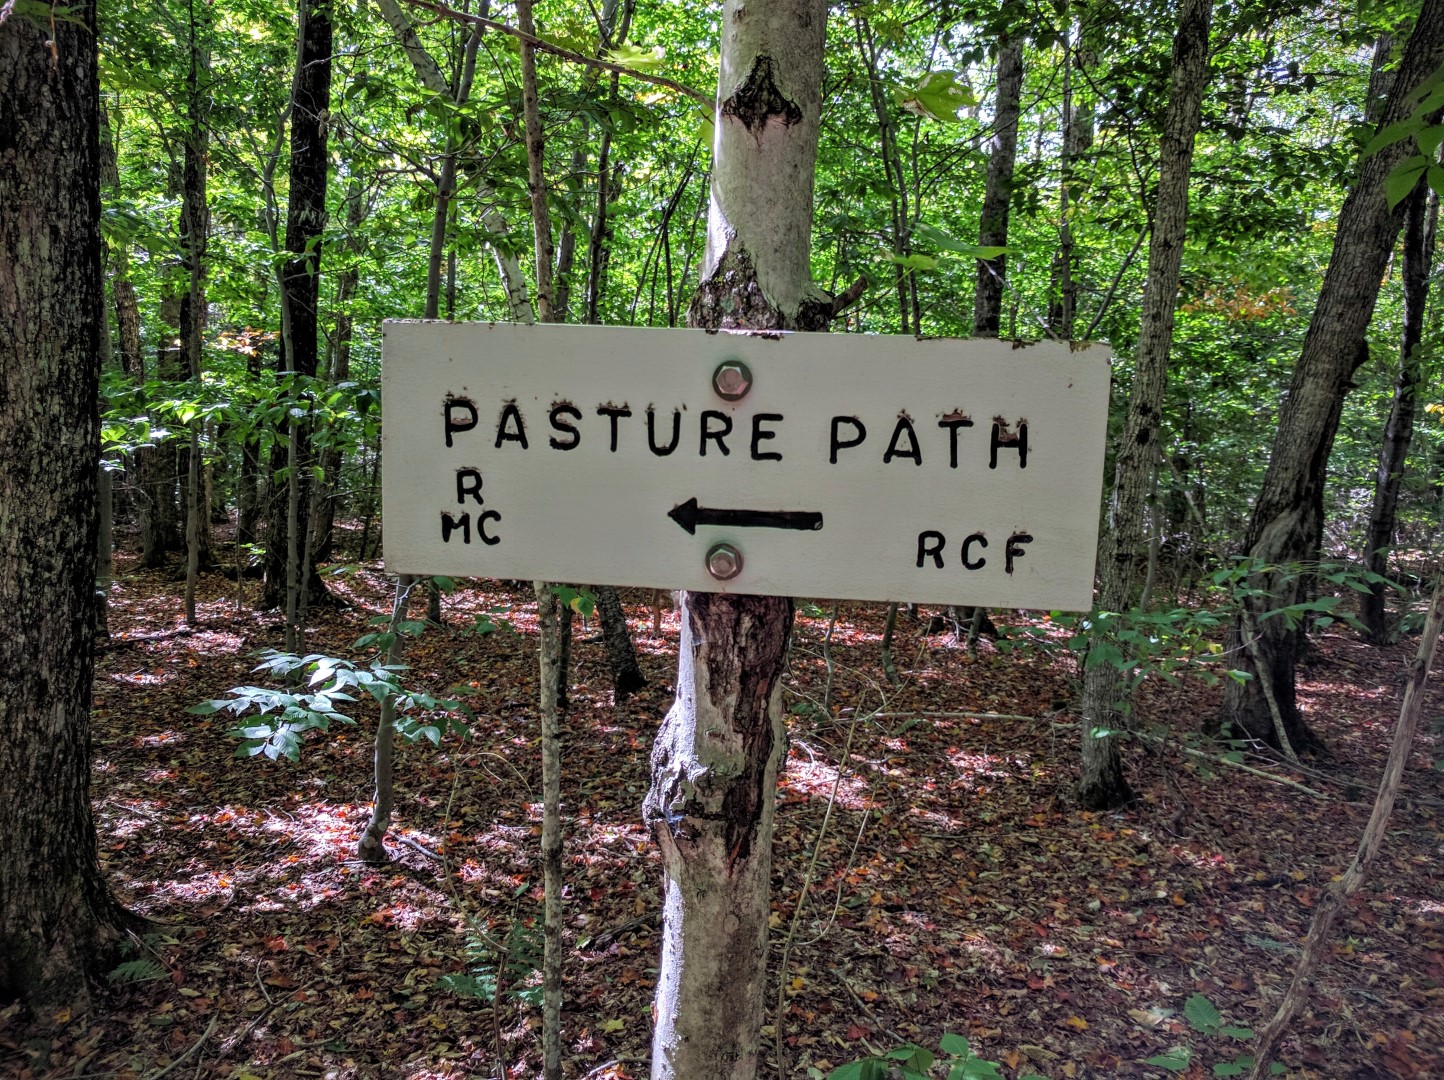 Pasture path